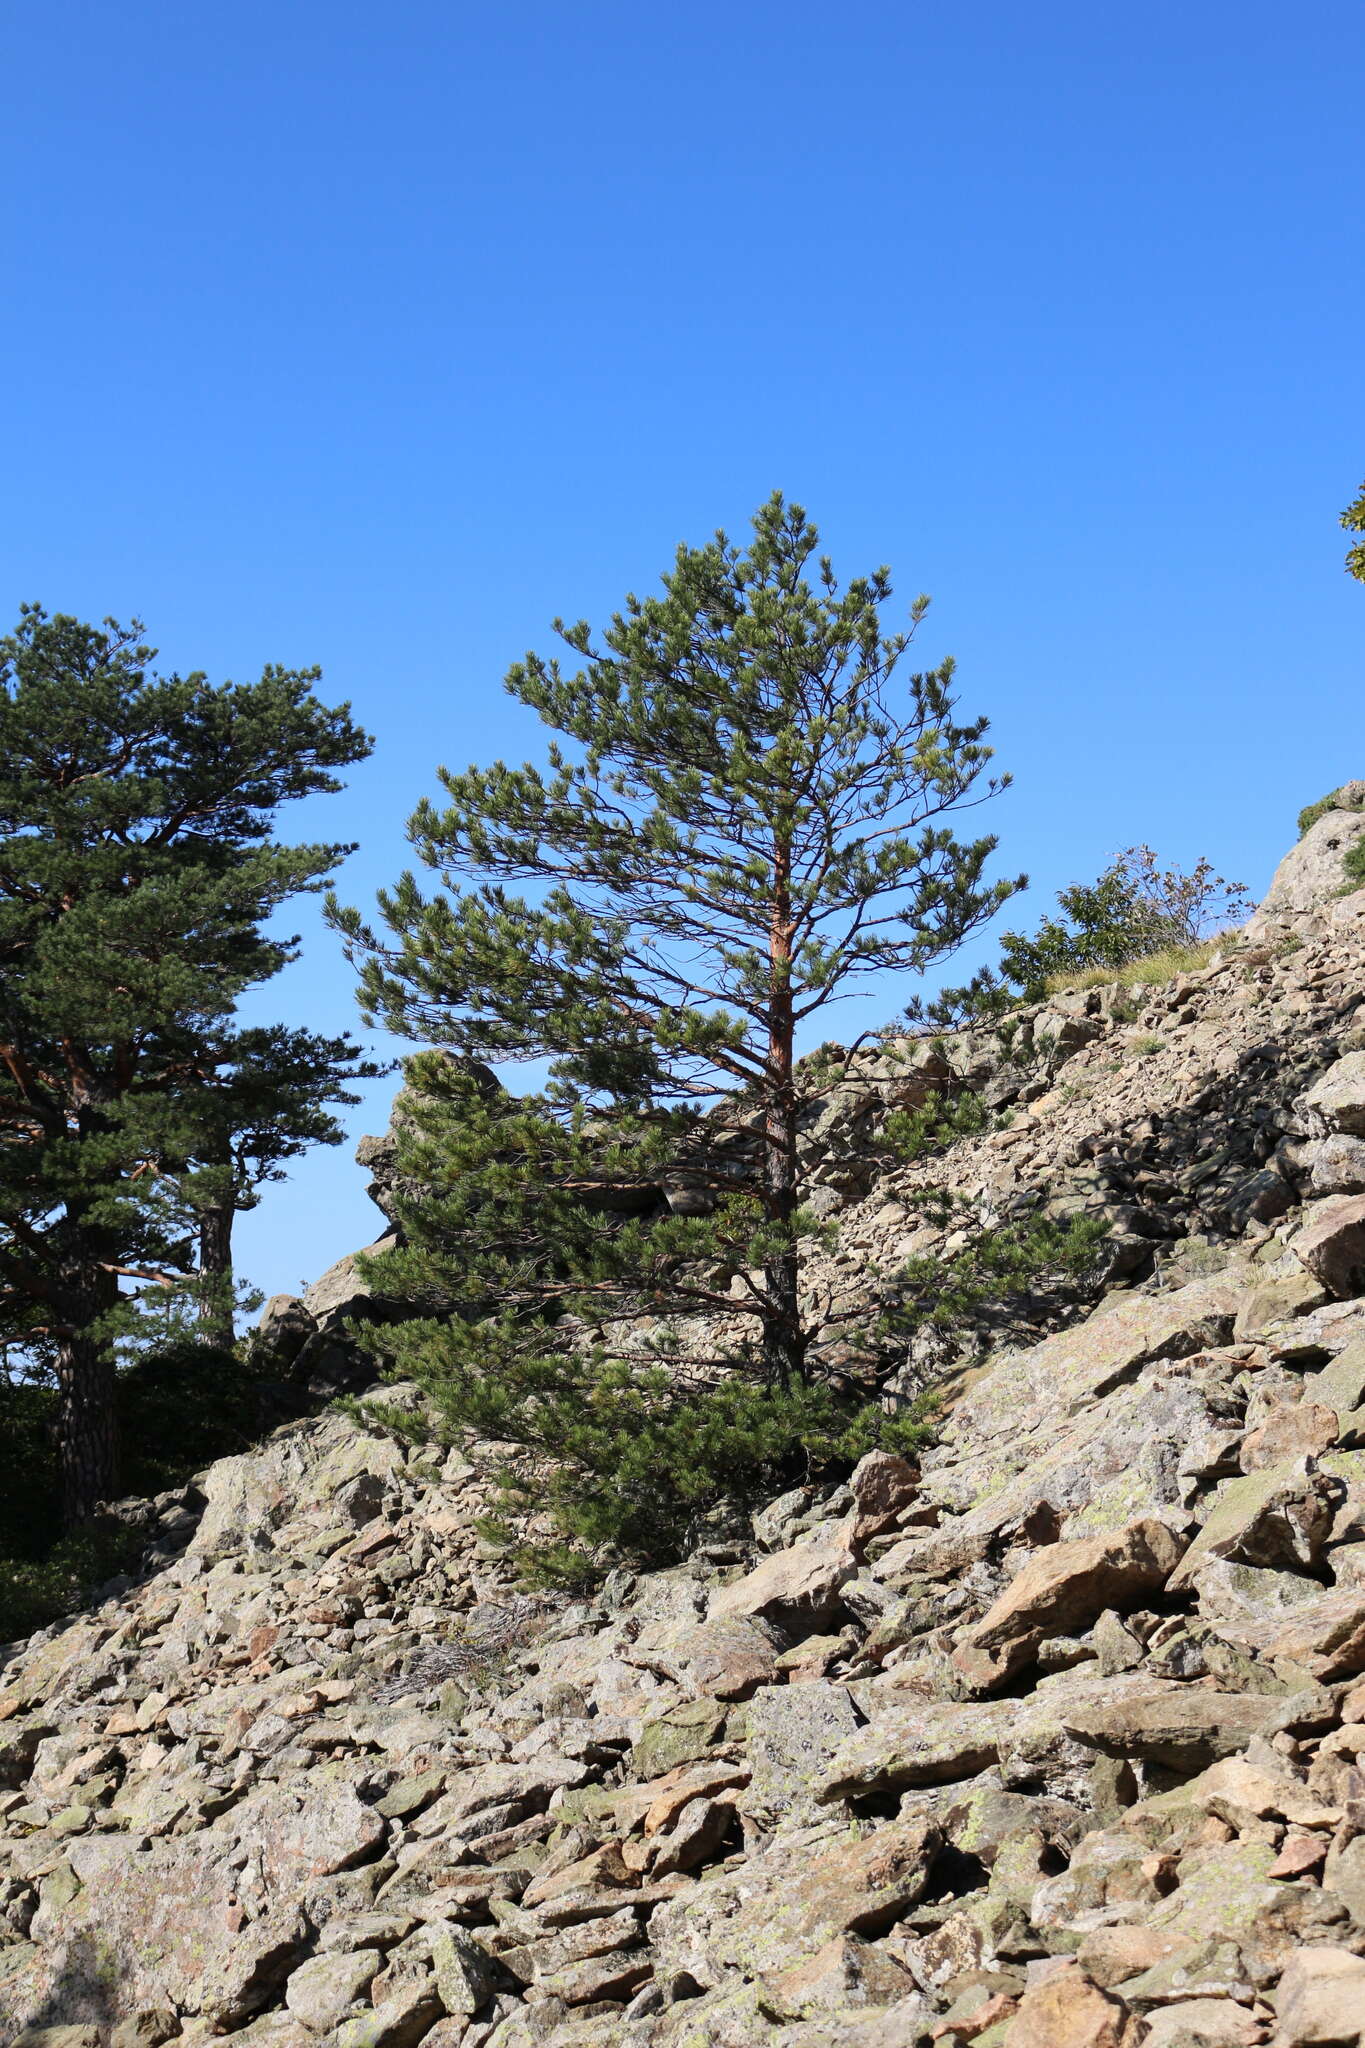 Image of Pinus sylvestris var. hamata Steven